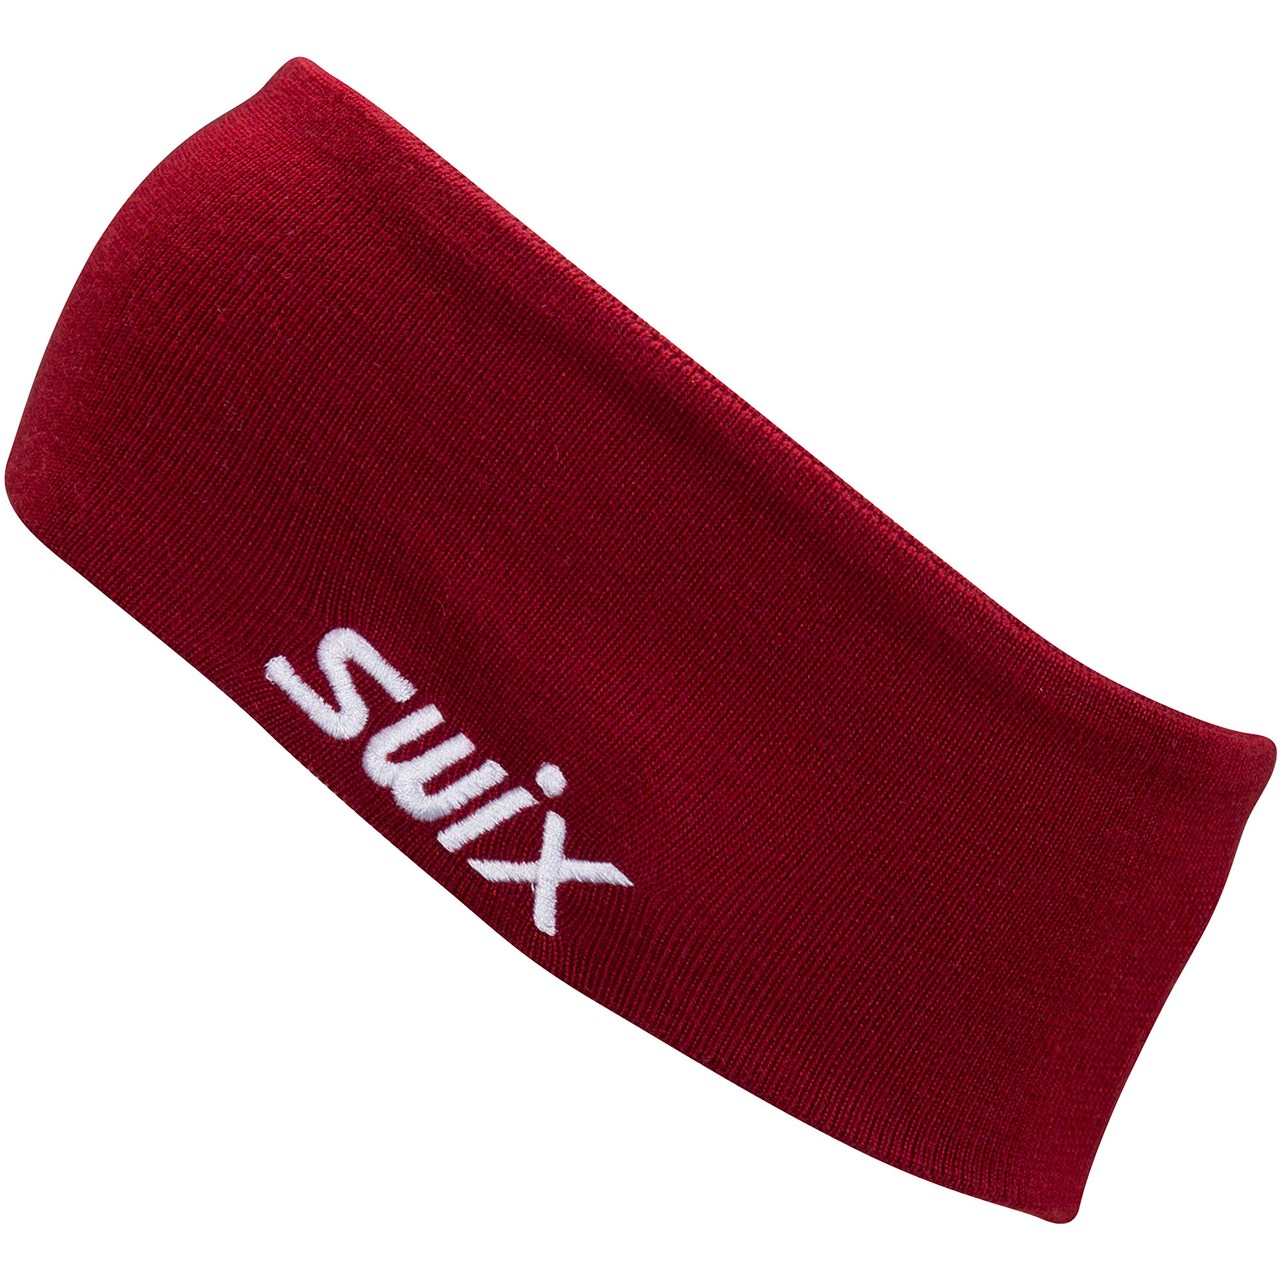 Swix Tradition headband